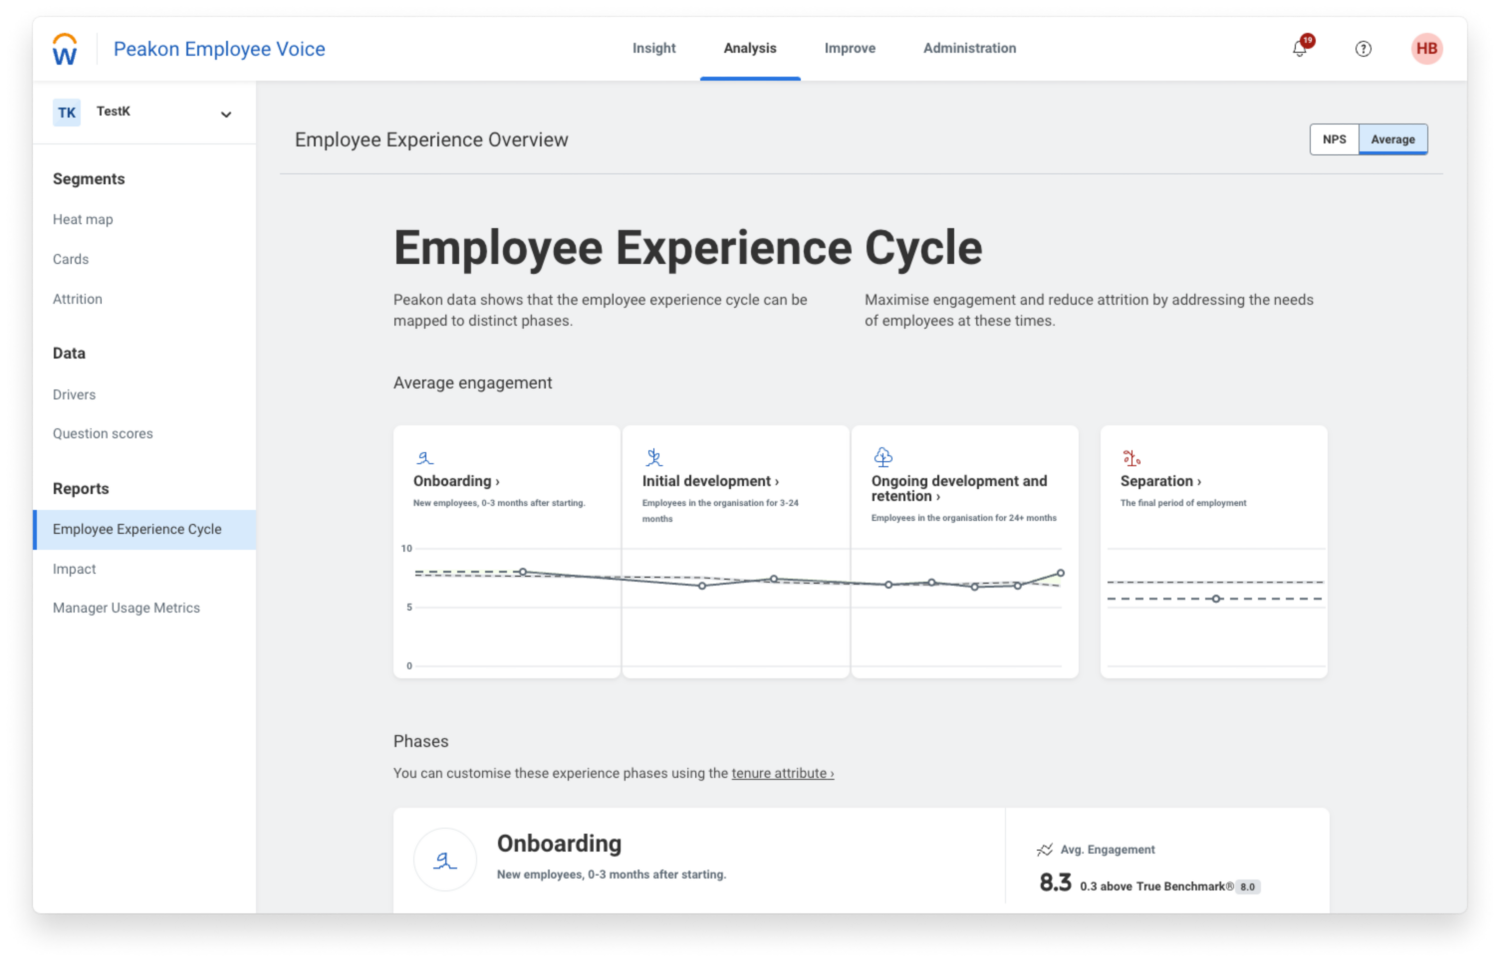 Dashboard di Workday Peakon Employee Voice che mostra le metriche di engagement per il ciclo dell'employee experience.